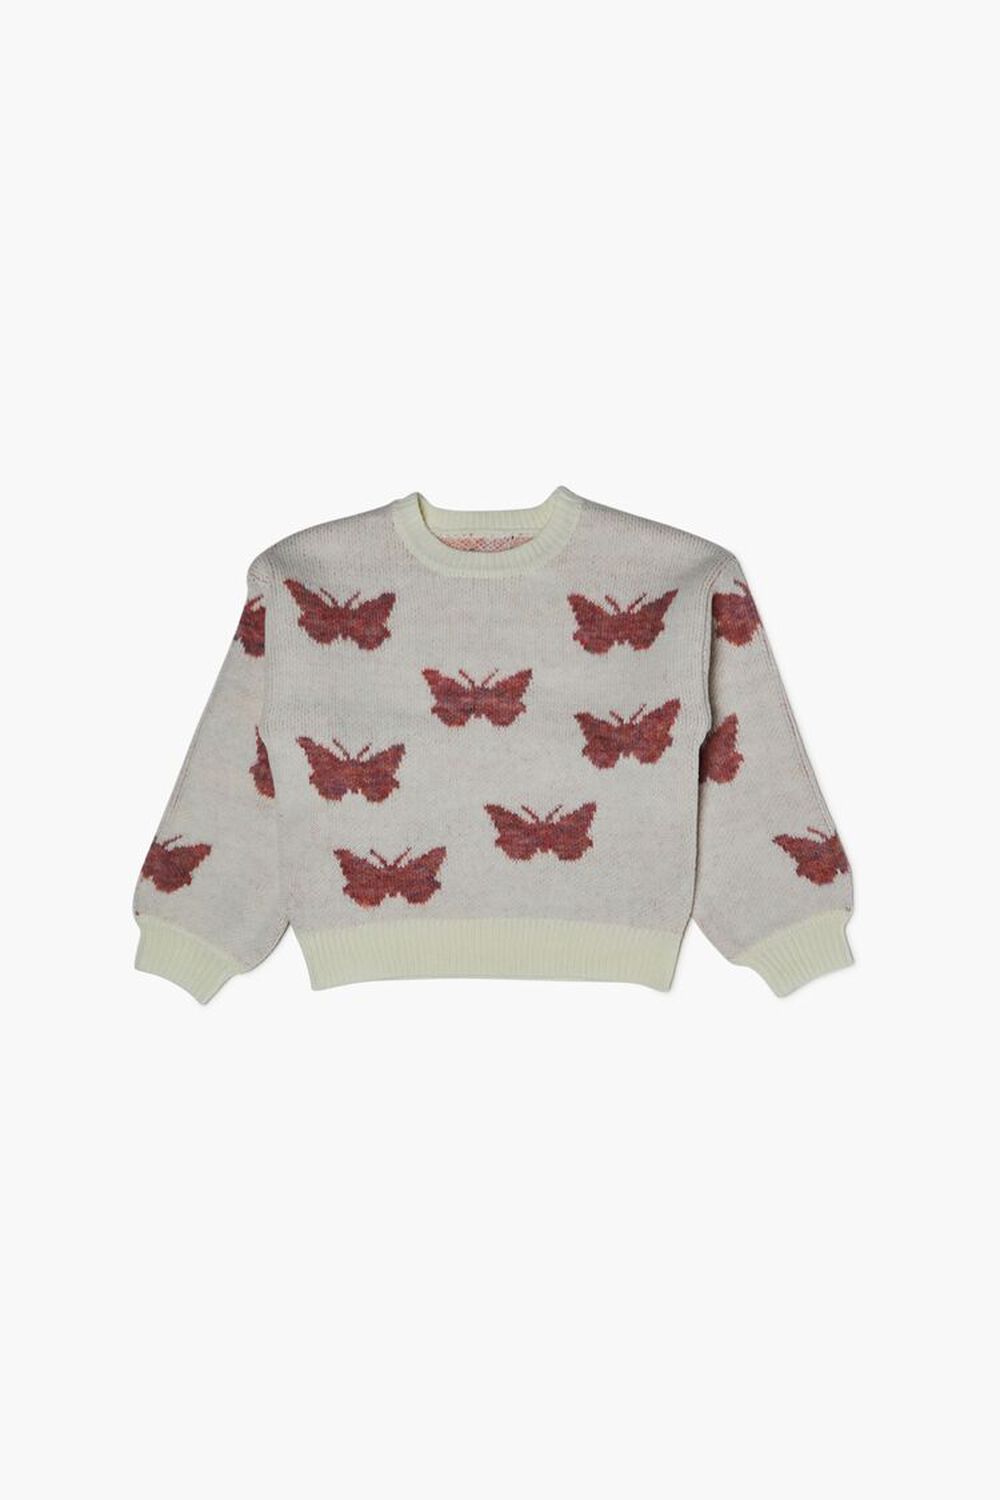 CREAM/MULTI Girls Butterfly Print Sweater (Kids), image 1